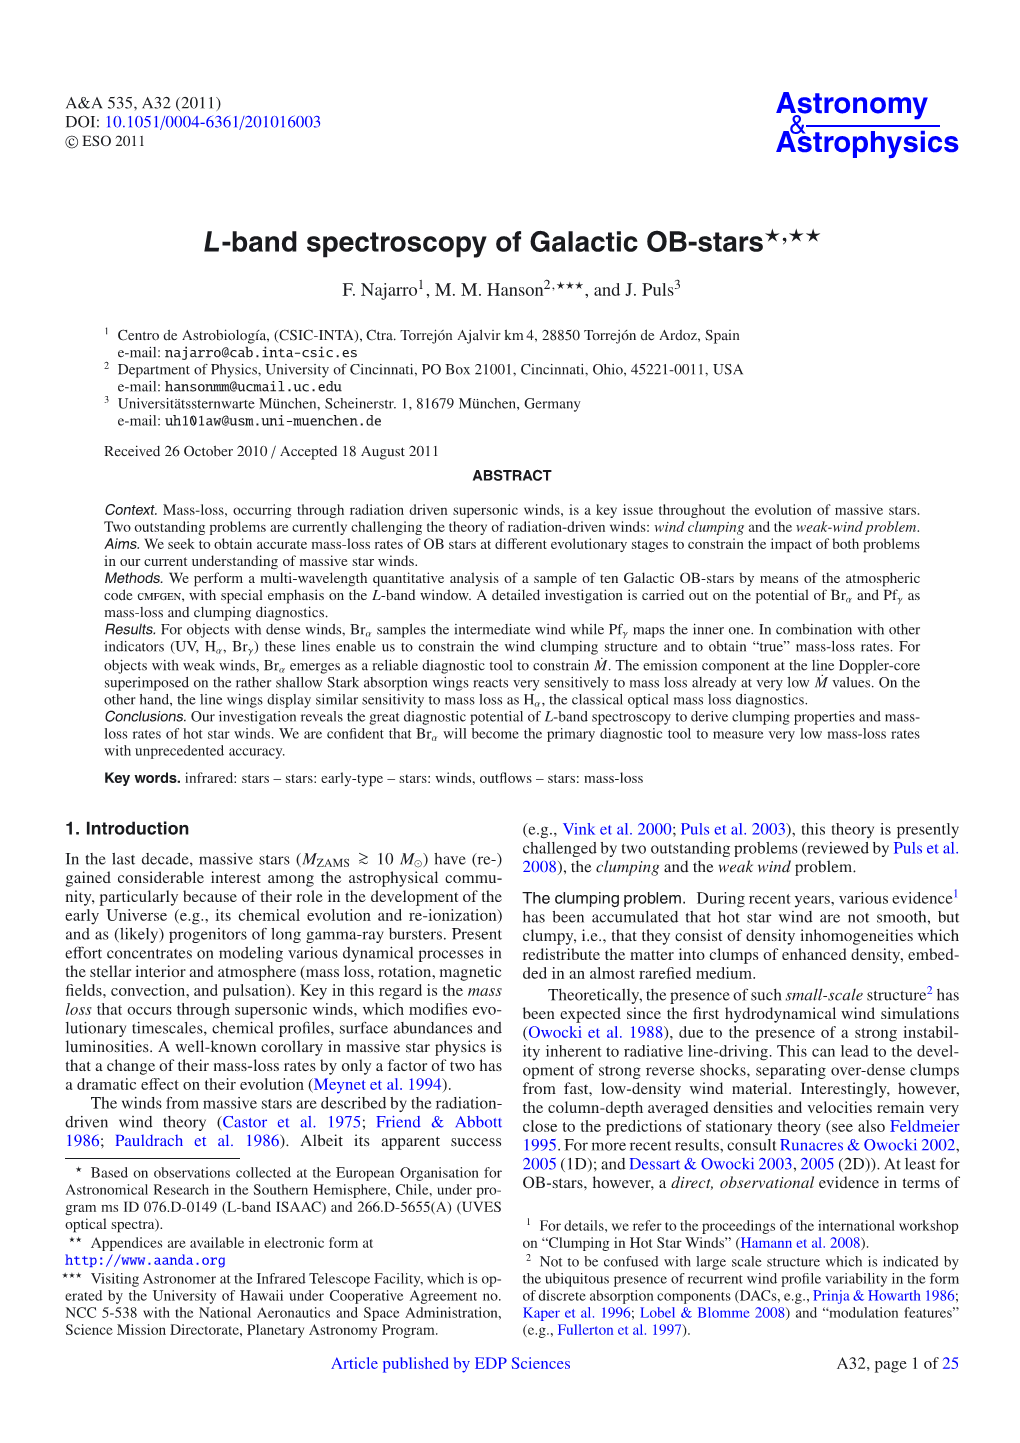 L-Band Spectroscopy of Galactic OB-Stars⋆⋆⋆